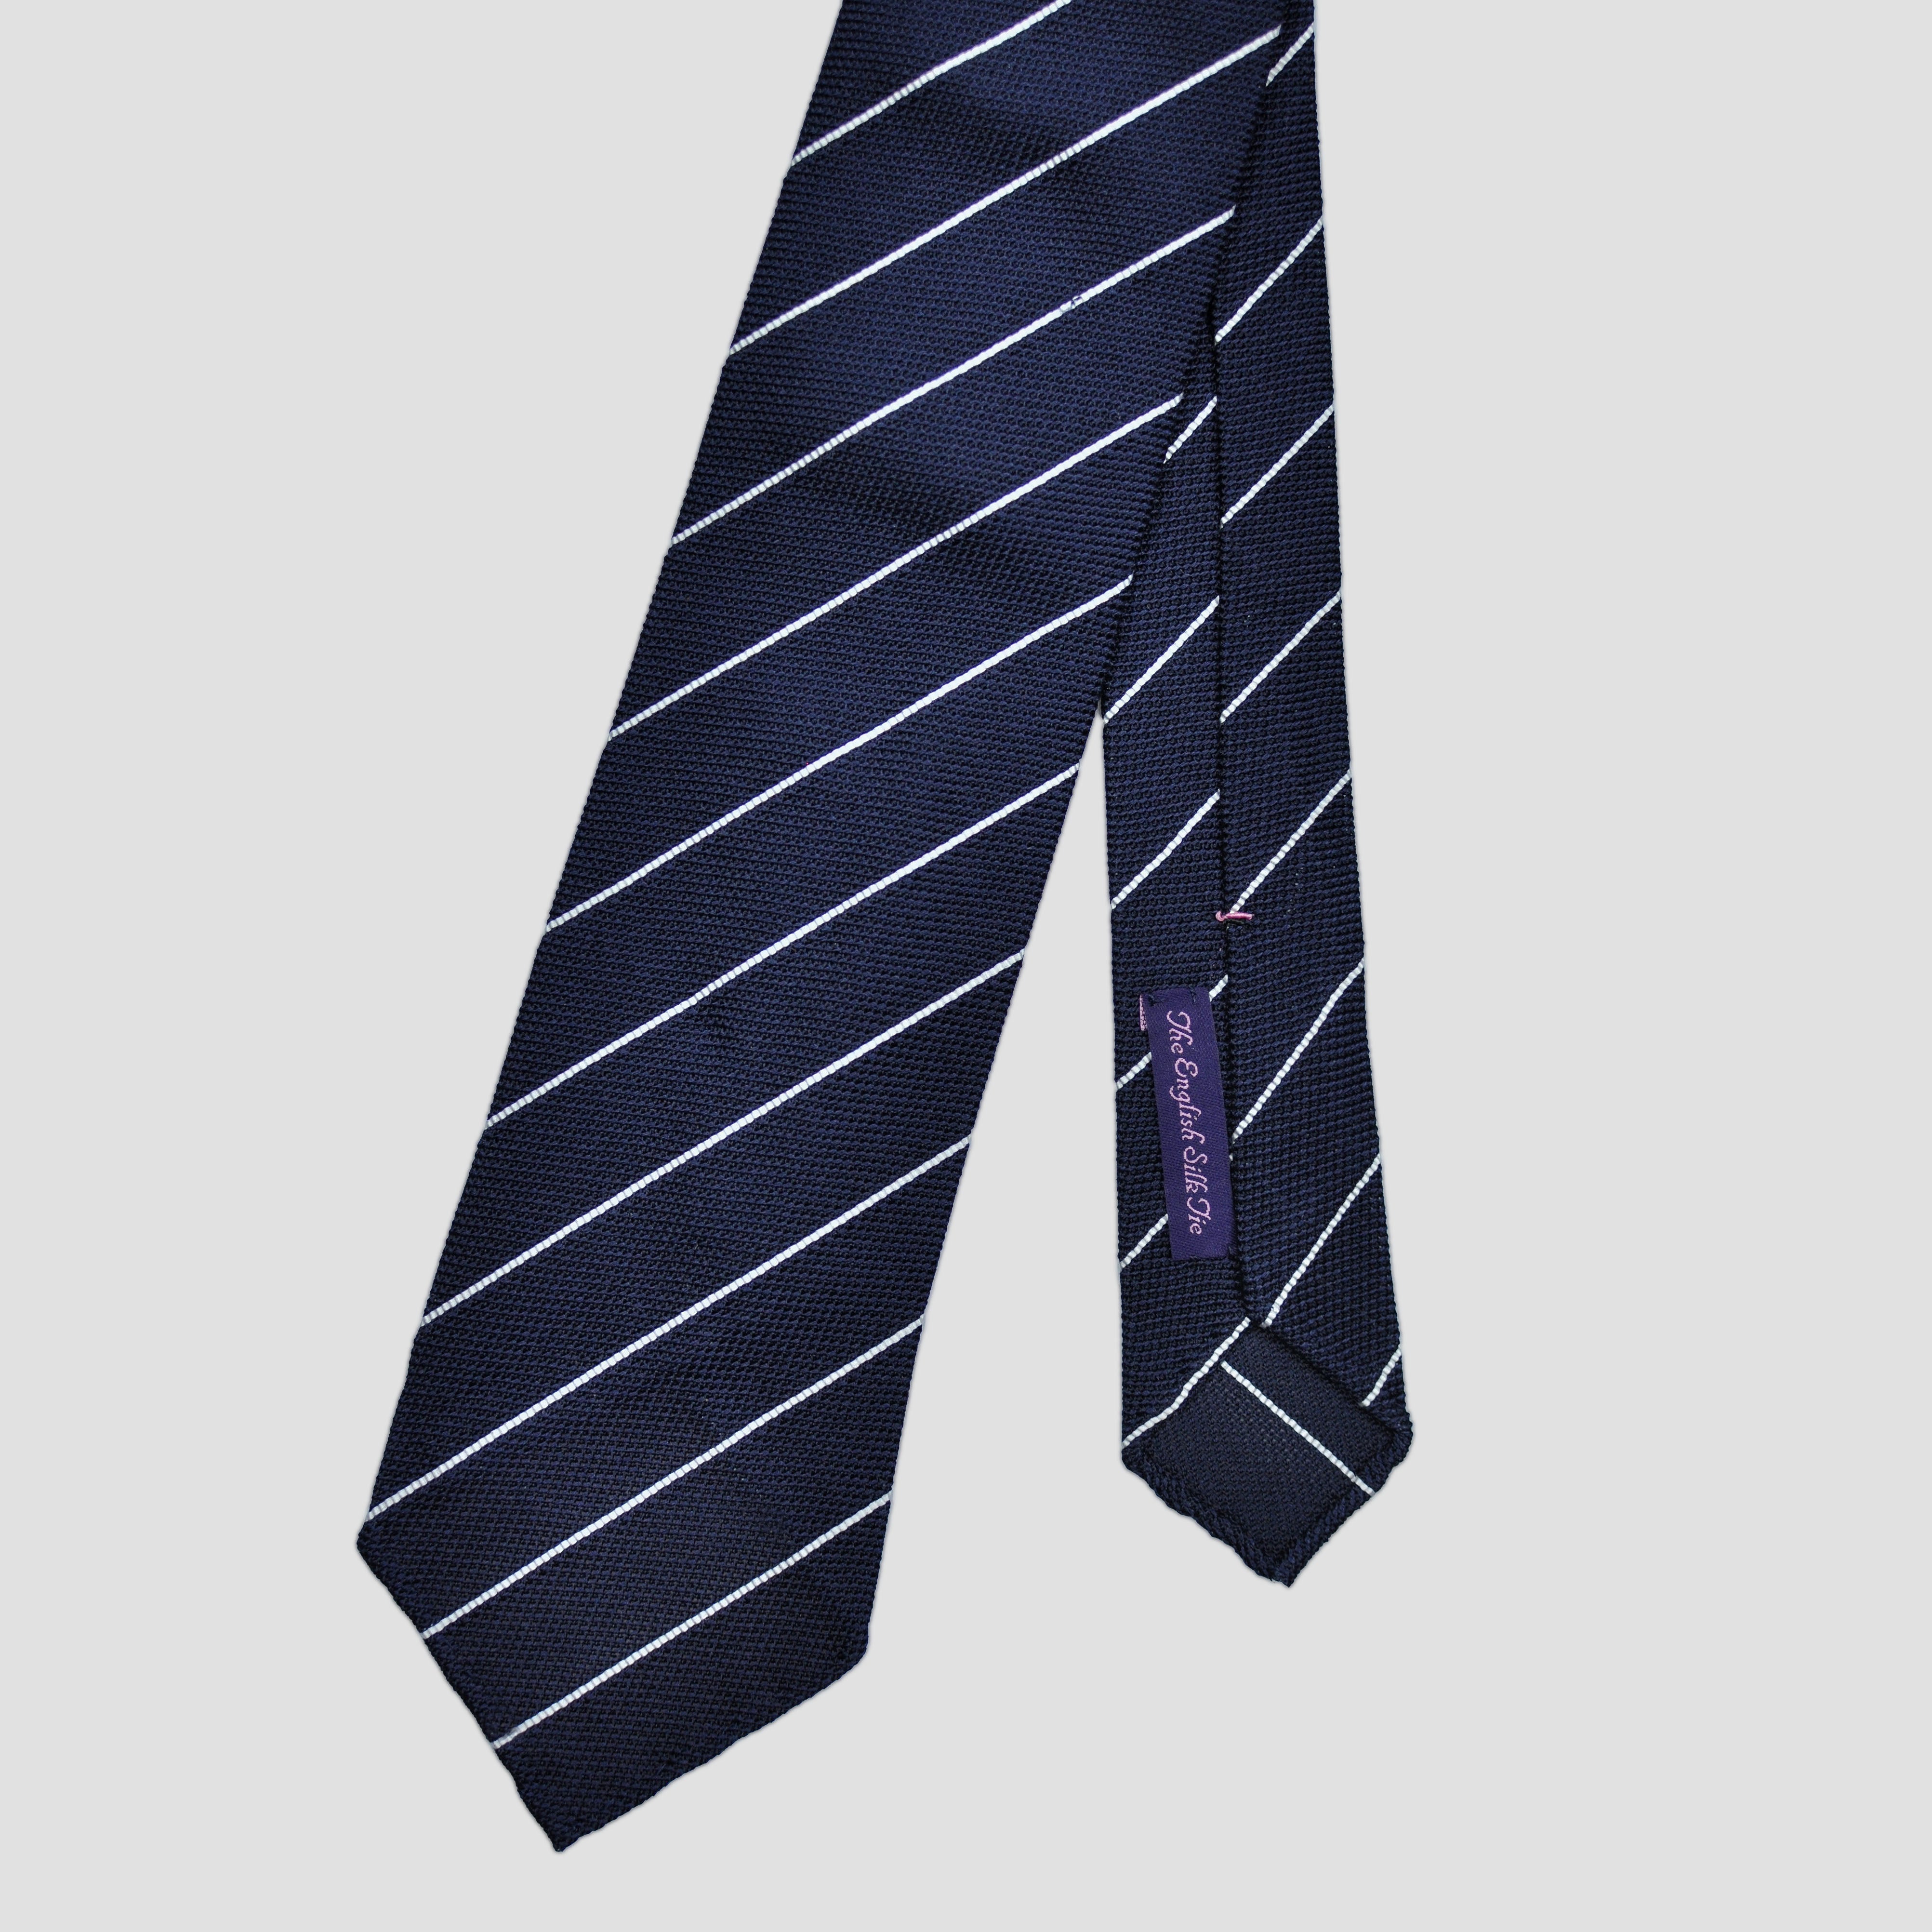 Pin Stripe Handrolled Grenadine Silk Tie in Navy & White